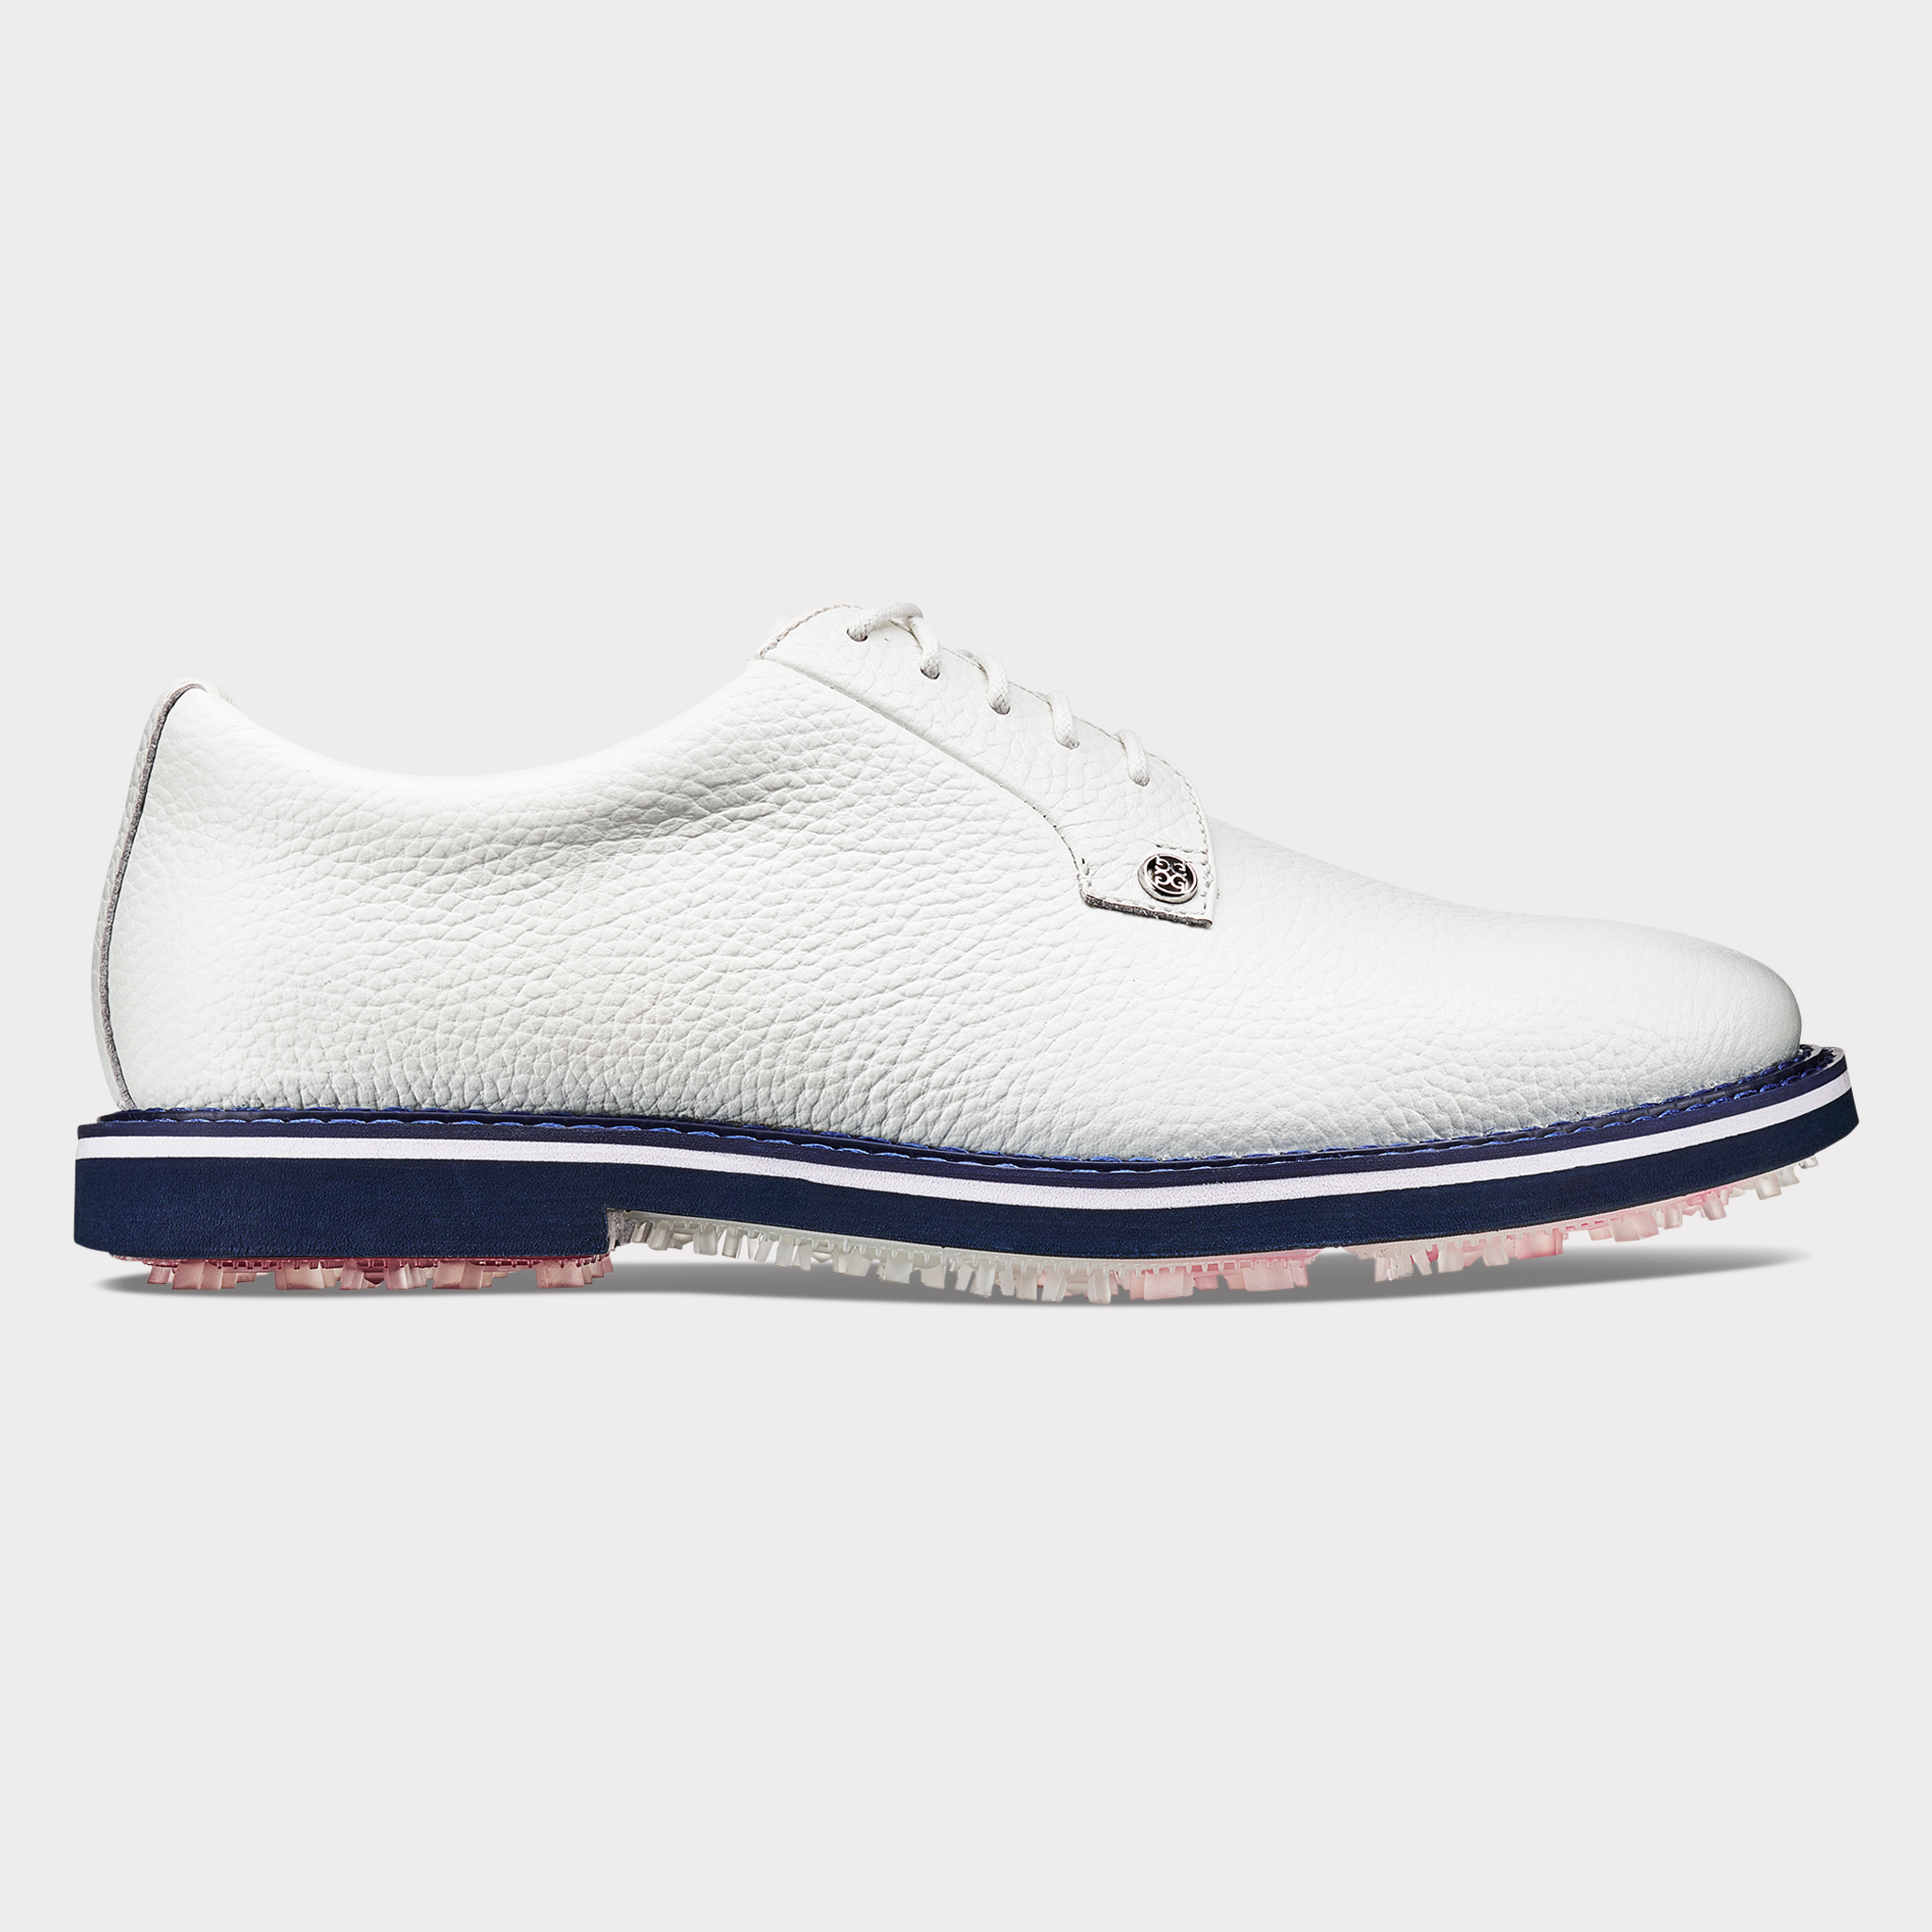 G/Fore Gfore G4 Gallivanter Bandana Golf Shoes Sneaker⛳️ LADIES US 7.5 ⛳️  Blue